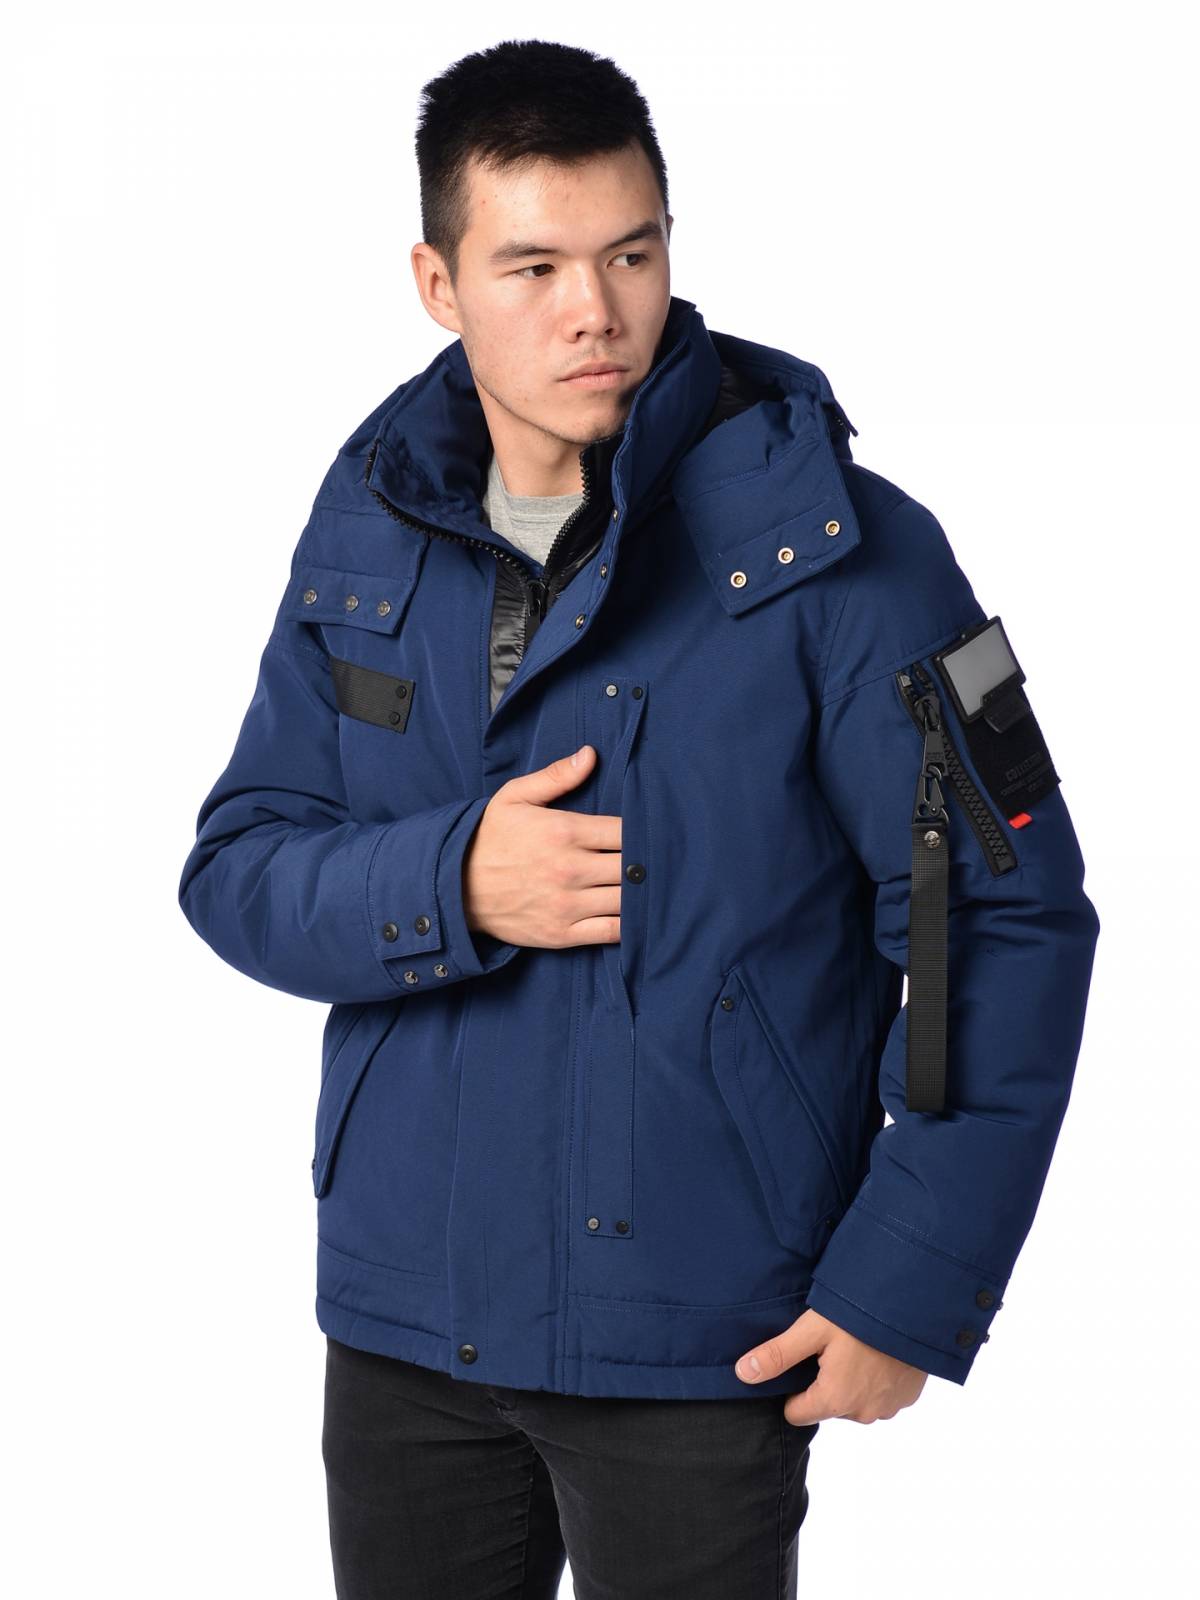 Зимняя куртка мужская Shark Force 3991 синяя 48 RU